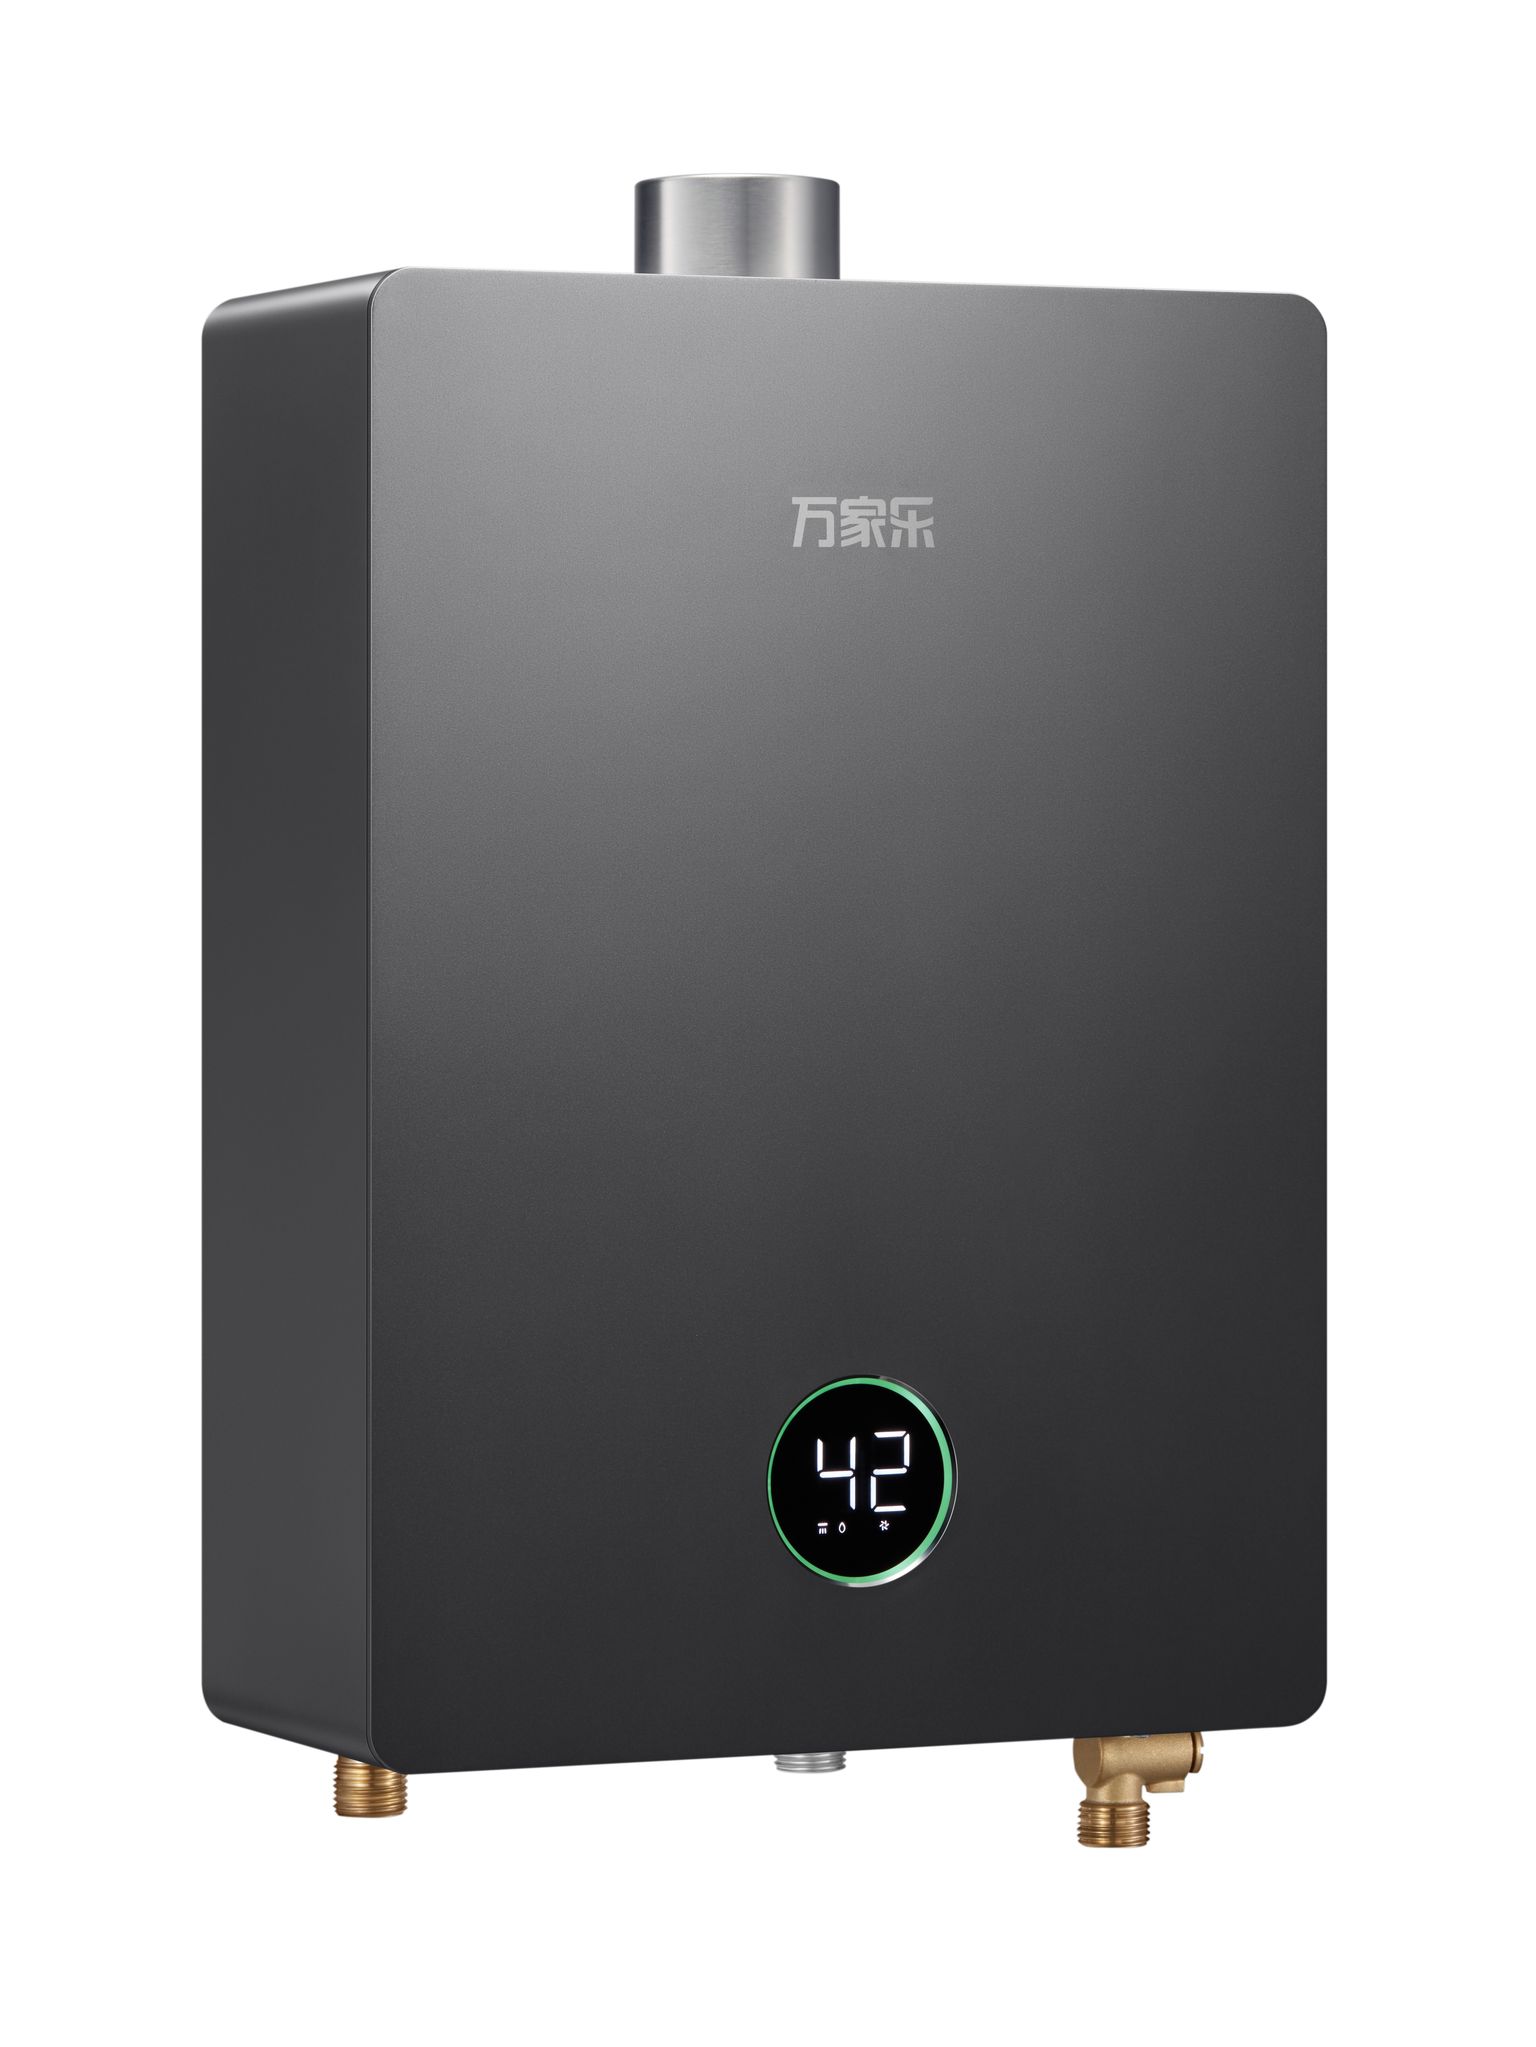 A3 gas water heater